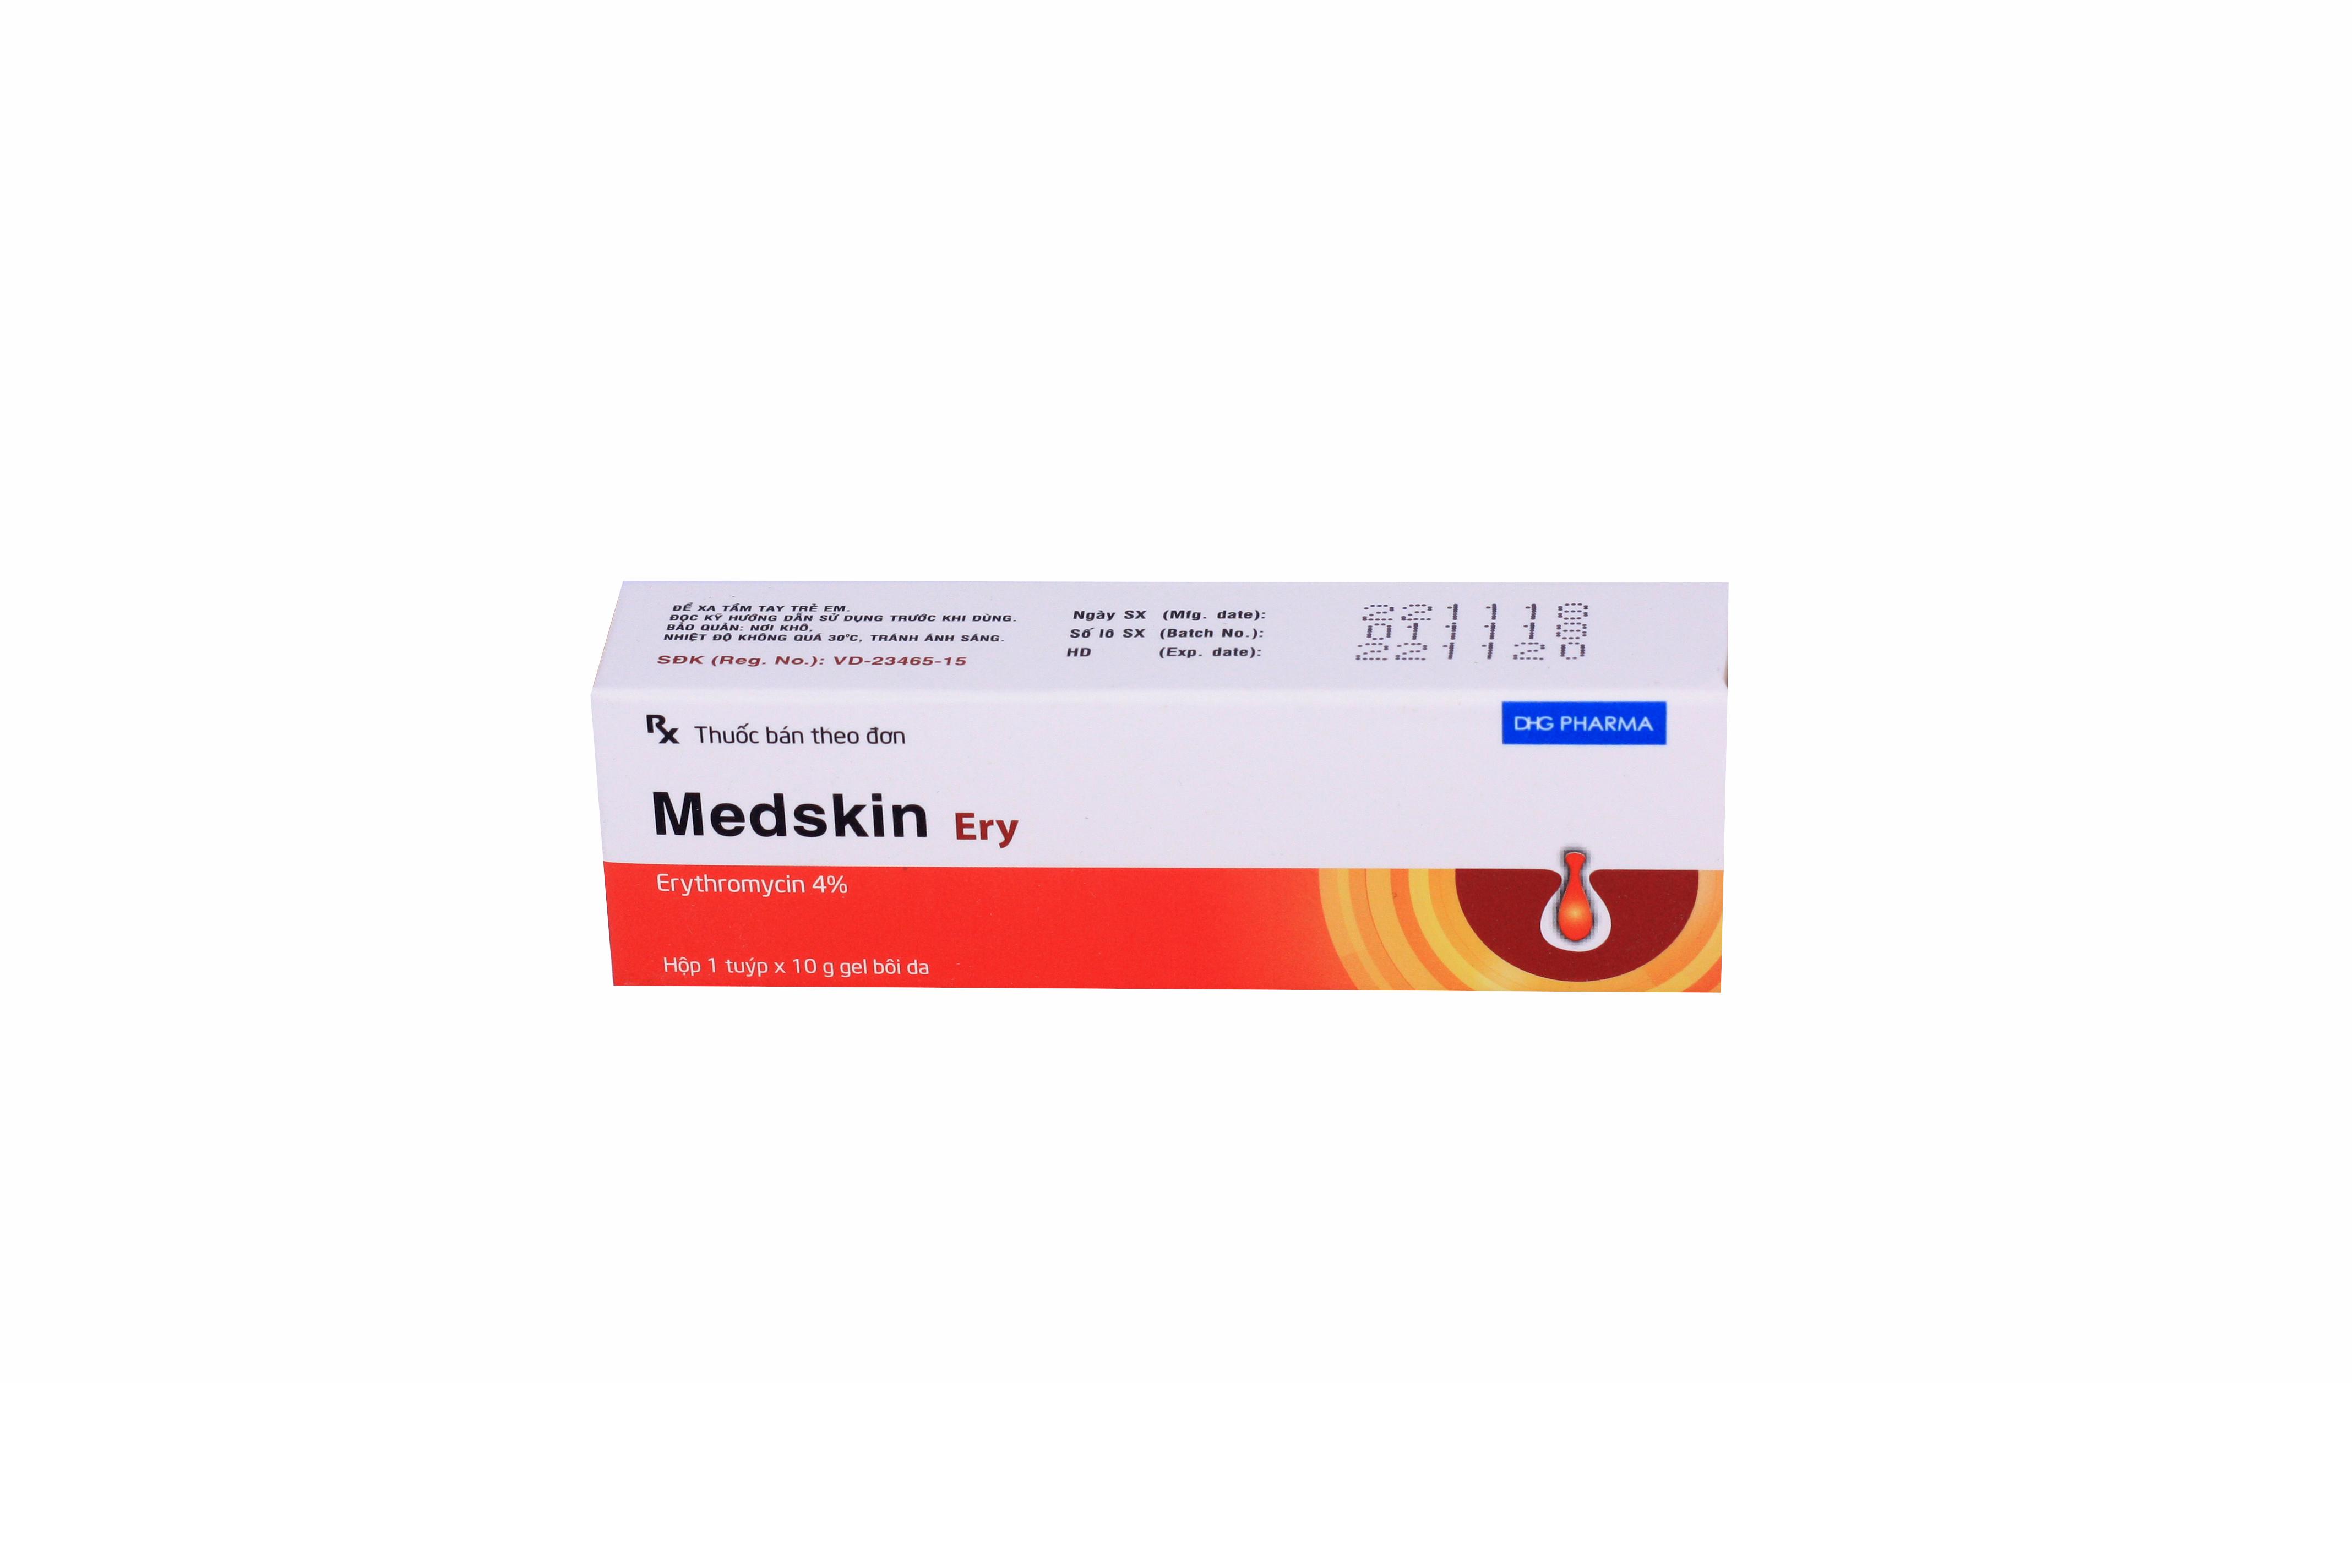 Medskin (Erythromycin) 4% Dược Hậu Giang (Lốc/10tuýp/10gr)